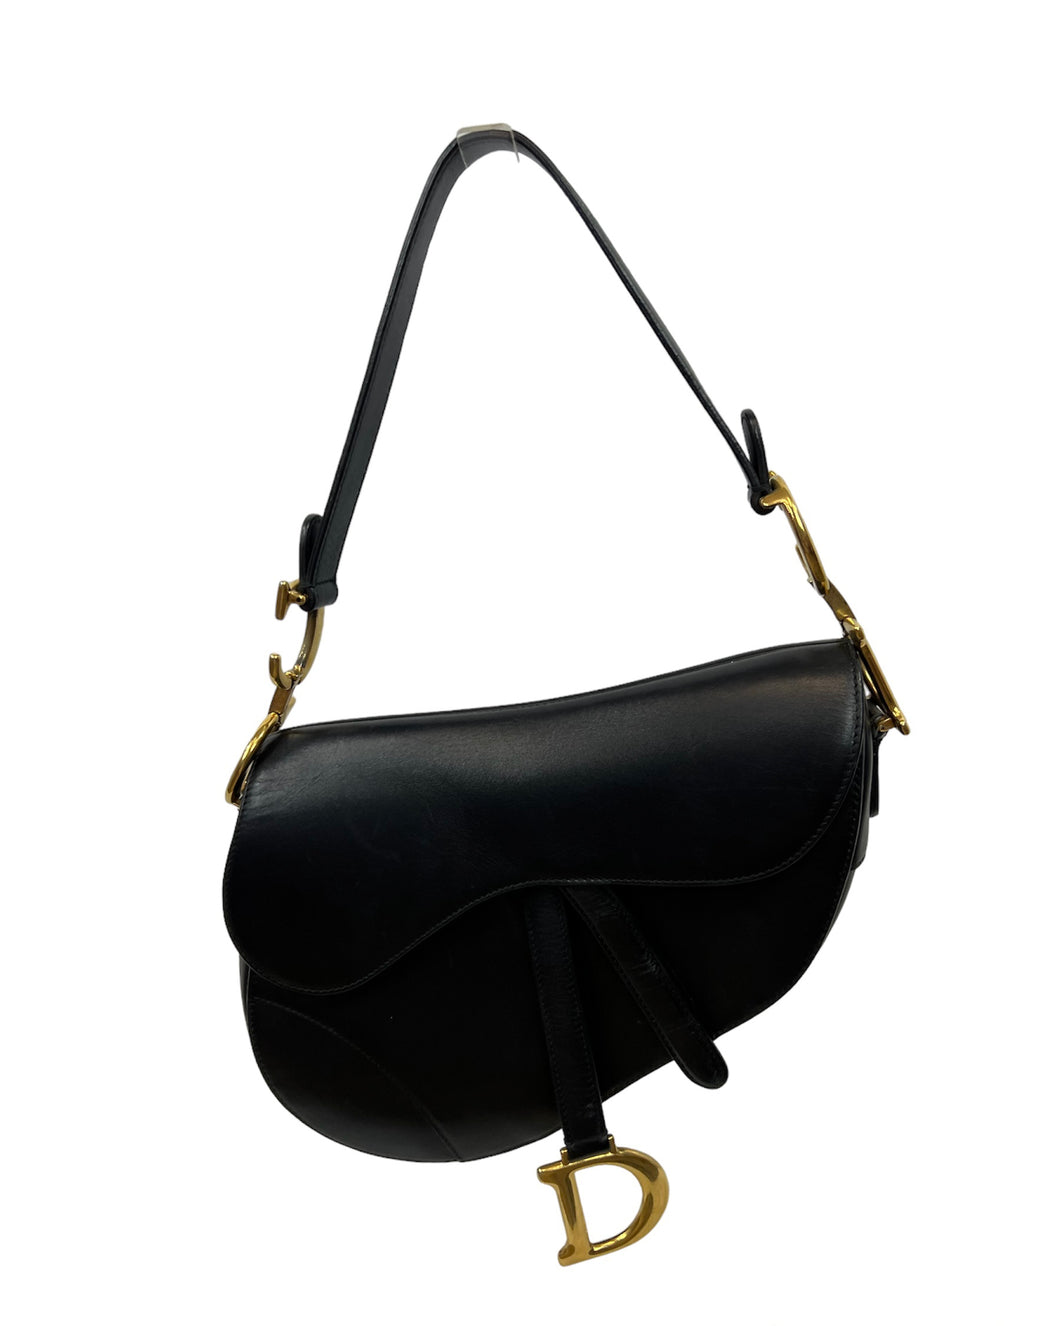 Christian Dior Saddle Black Bag